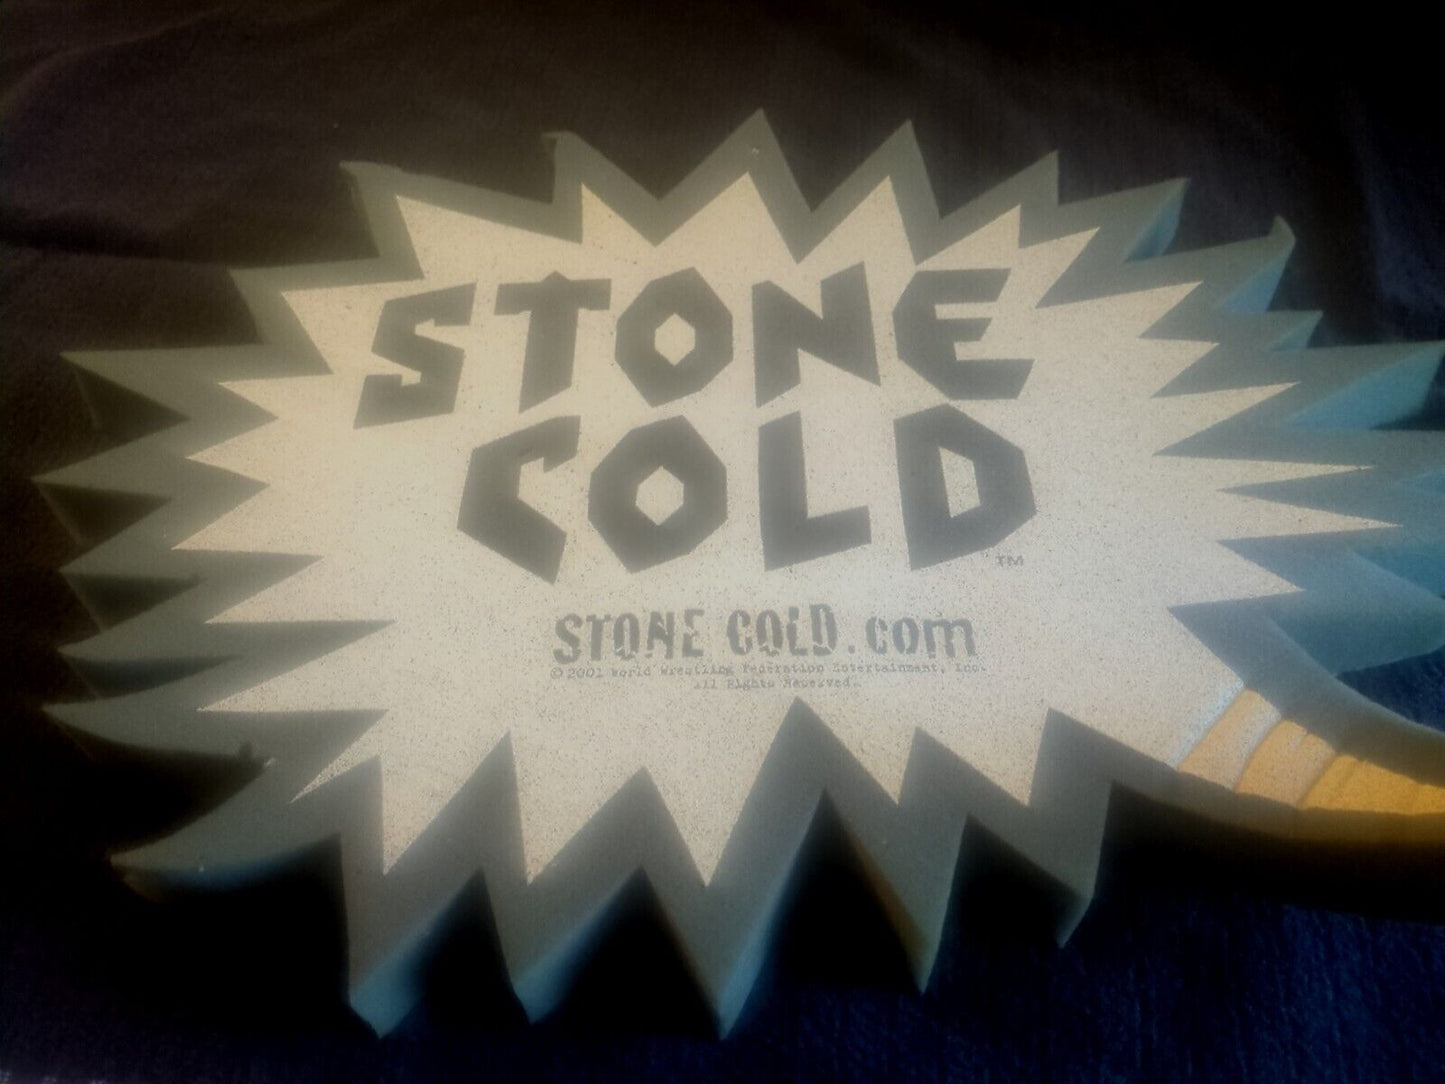 Stone Cold Steve Austin WHAT foam